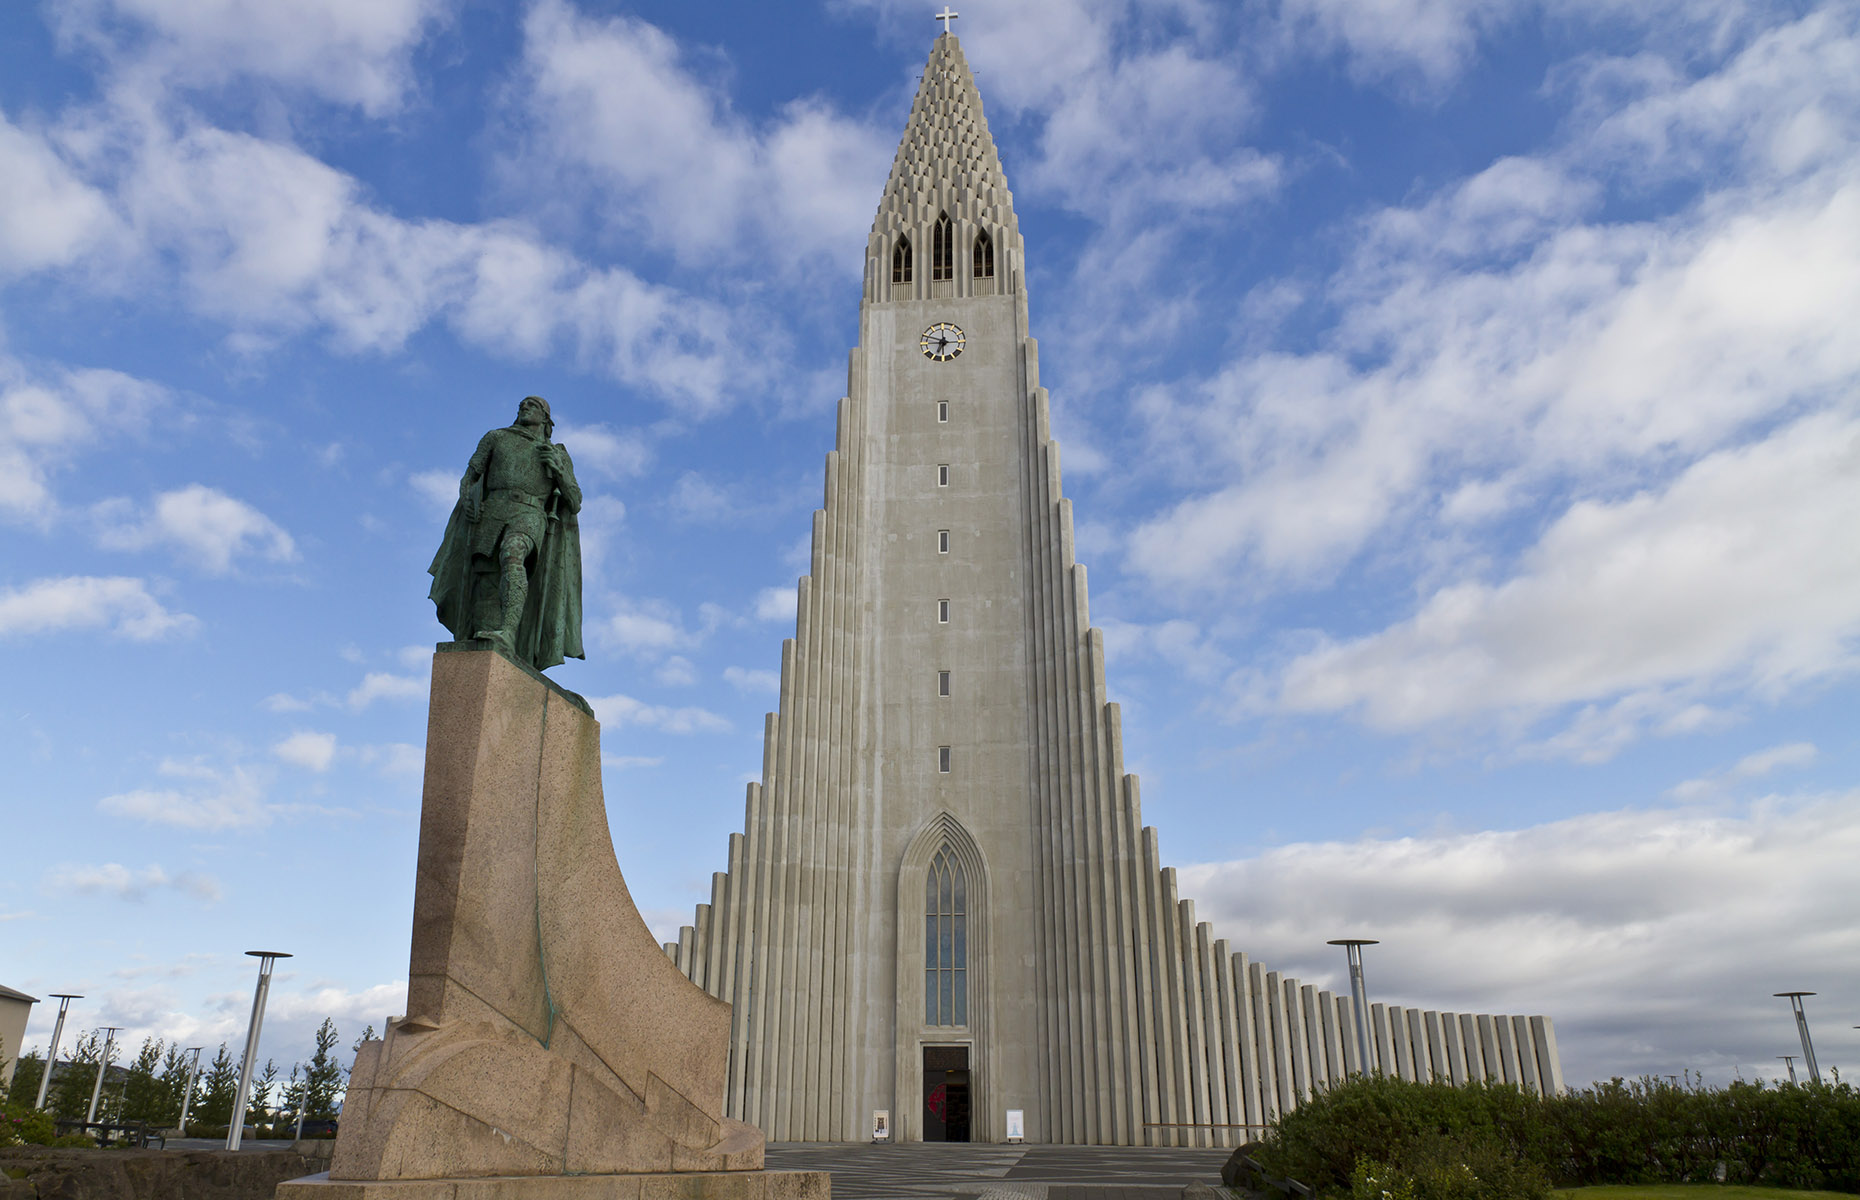 Hallgrimskirkja church in Reykjavik Iceland (Image: Chrispo/Shutterstock)